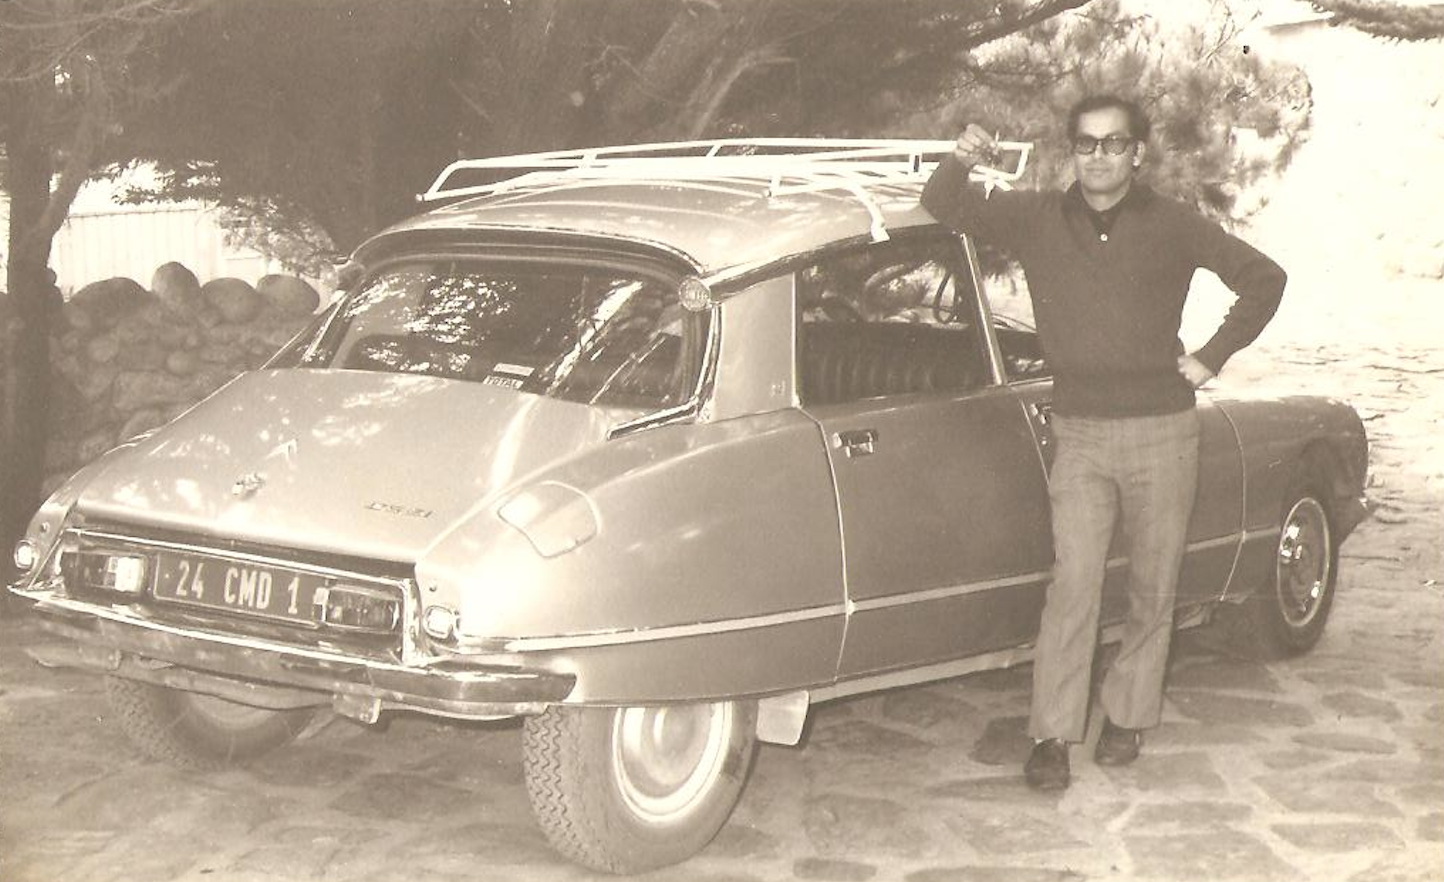 Manuel Araya, l’ancien chauffeur de Pablo Neruda, devant la Citroën que le poète a amenée de France en 1972. Isla Negra, Chili. Fonds personnel de Manuel Araya.